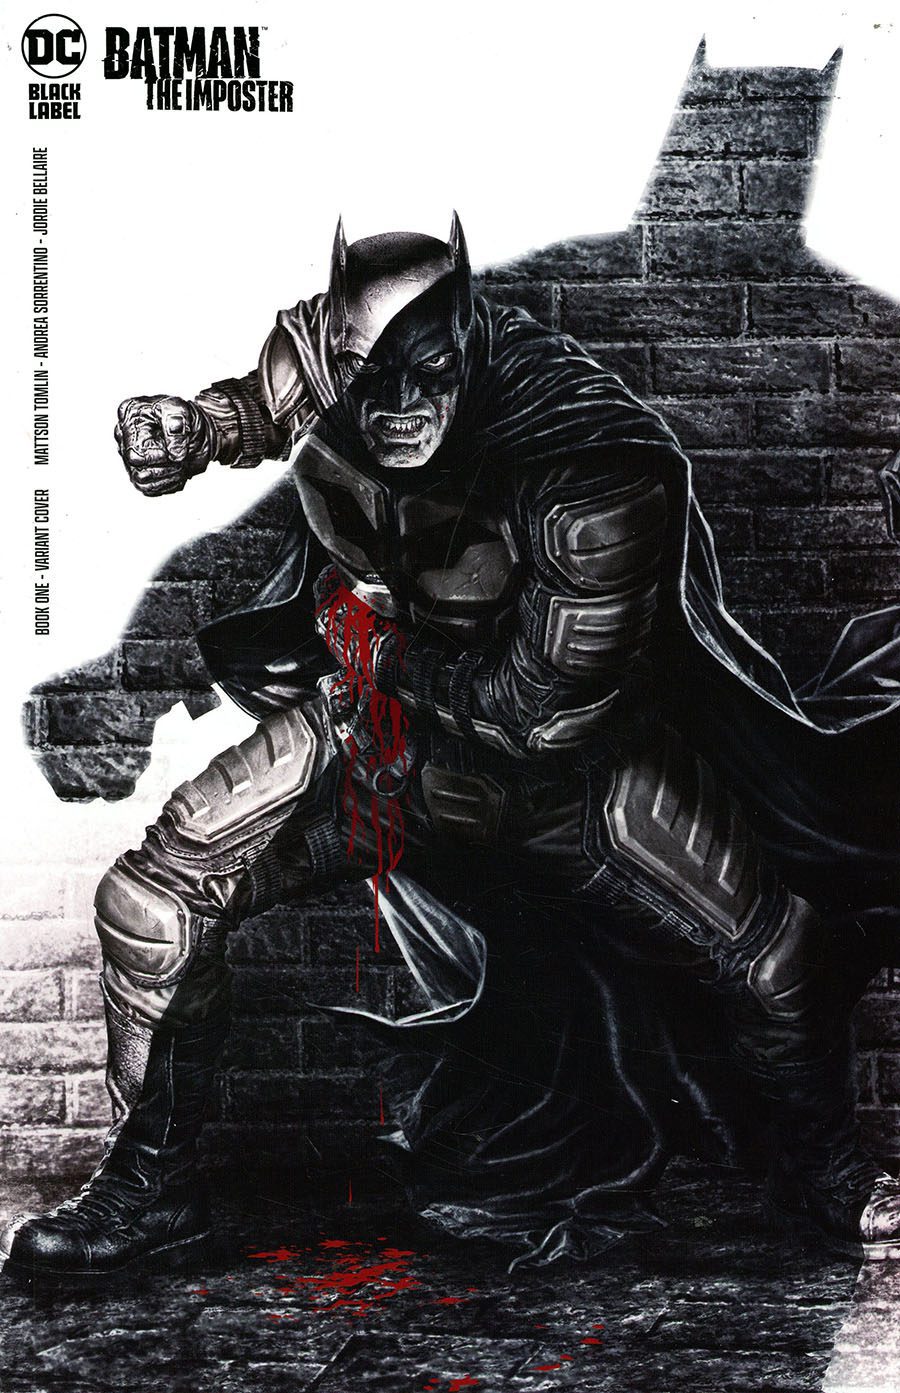 Comprar Batman: The Imposter #1 Cover Batman: The Imposter #1 Cover B  Variant Lee Bermejo Cover ⋆ tajmahalcomics